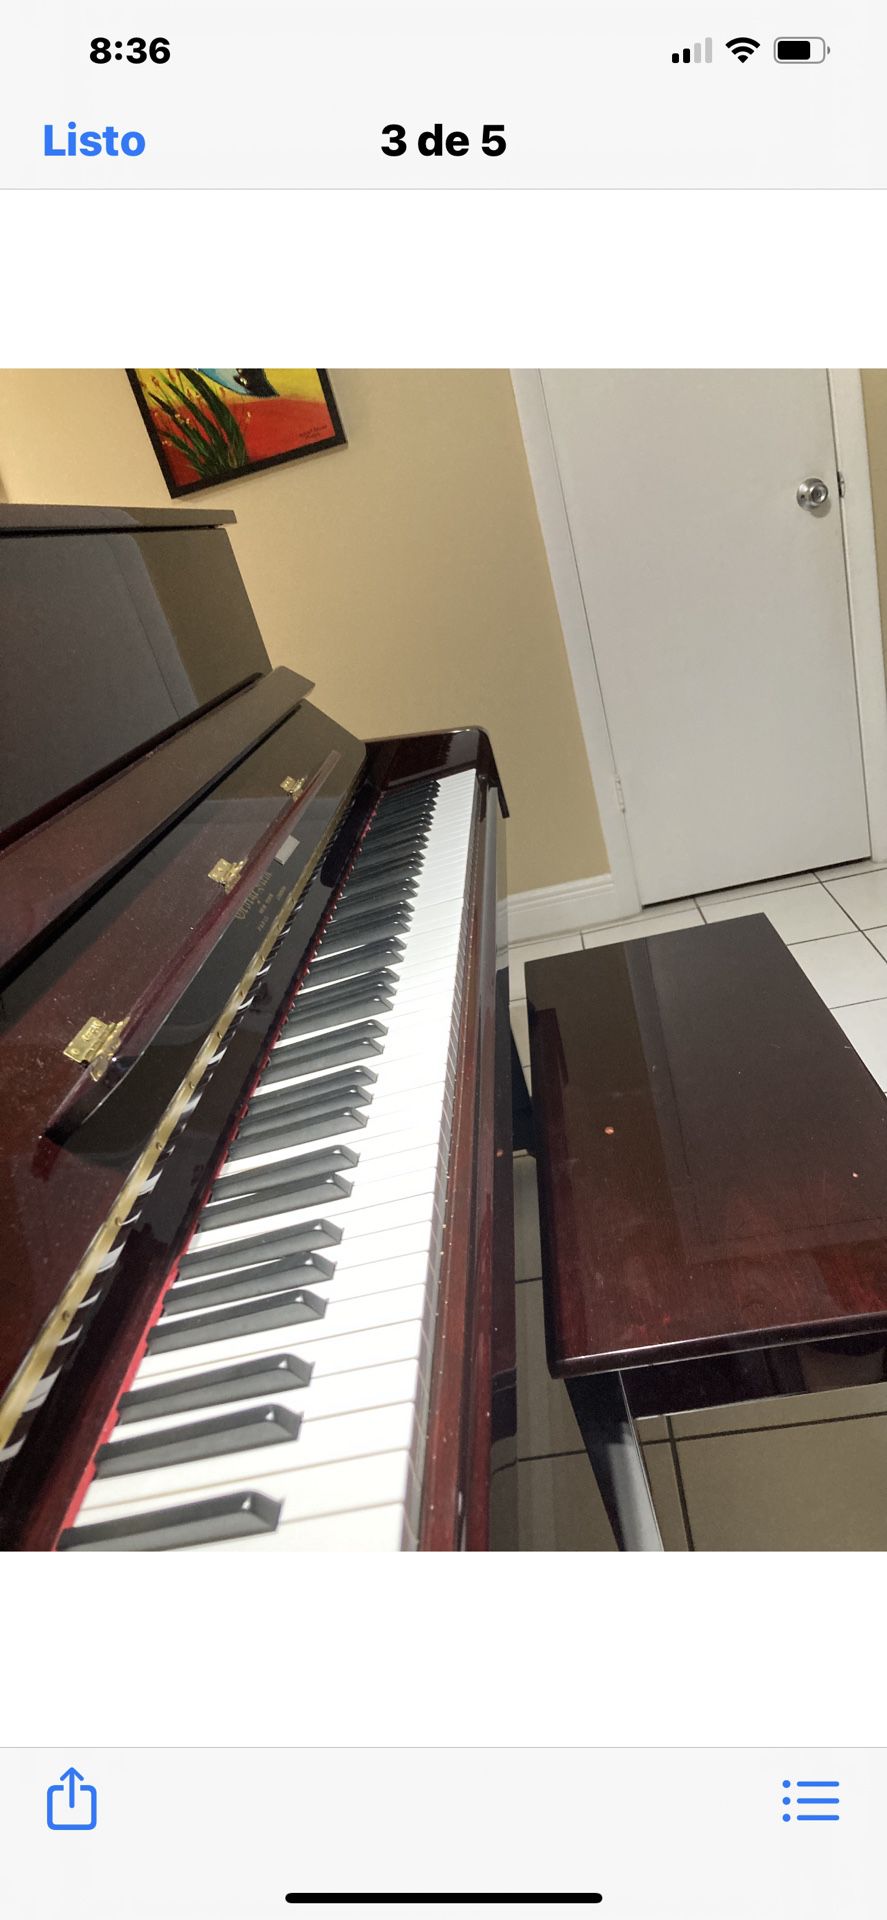 Piano George Steck  (vertical piano color  mahogany)